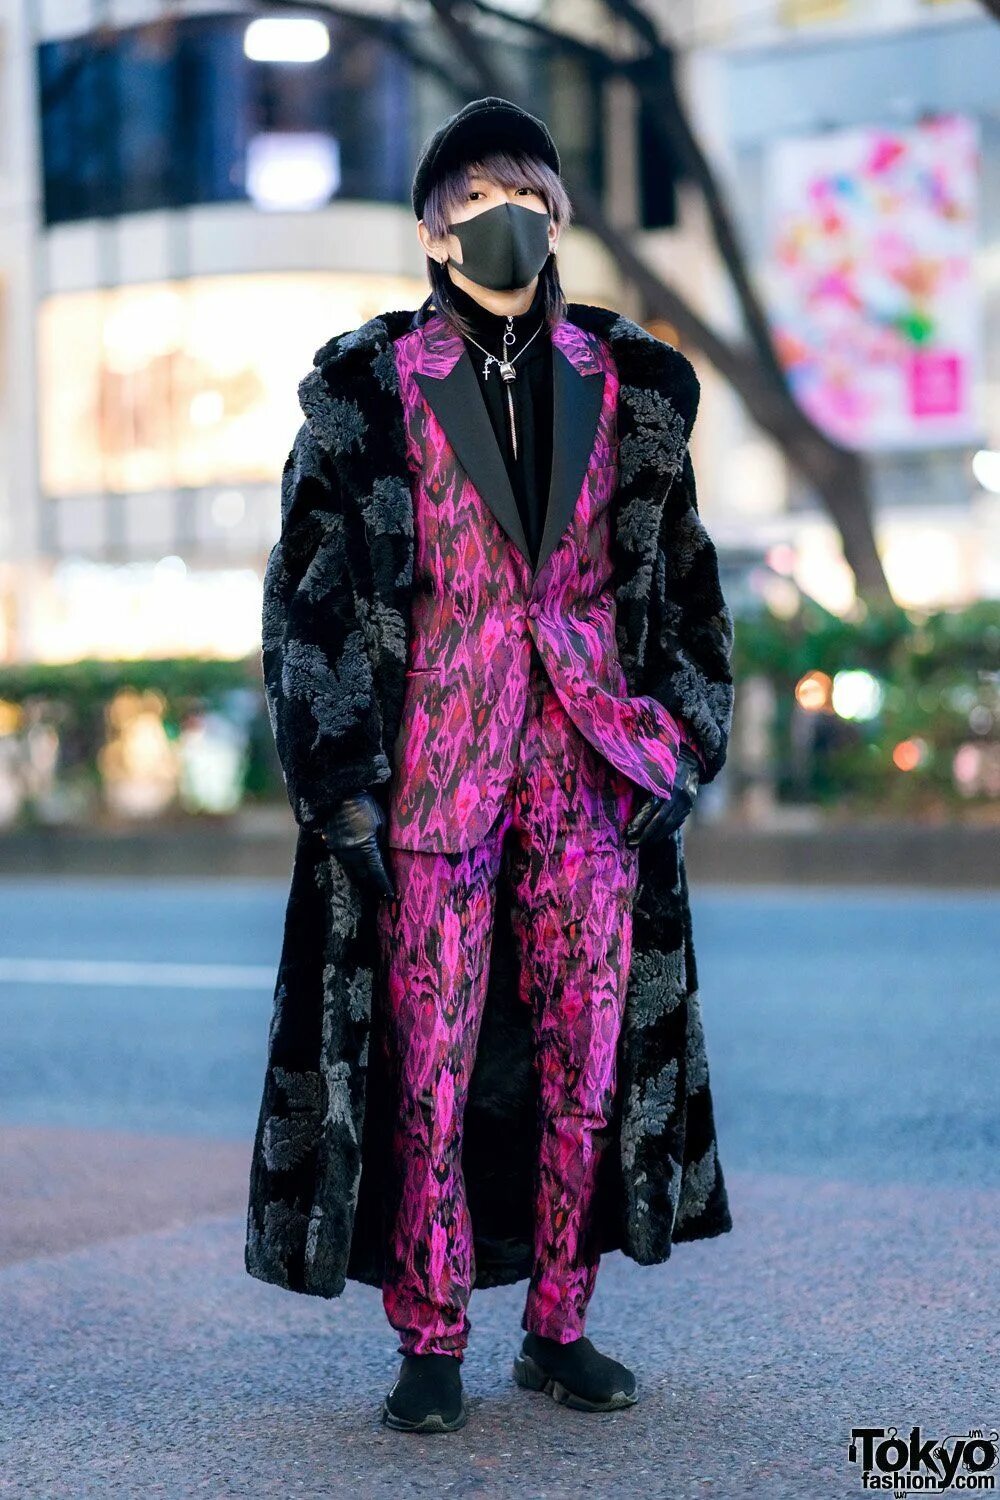 Японская мода Харадзюку мужская. Япония Харадзюку парни. Японский уличный стиль Харадзюку. Харадзюку стиль мужской.